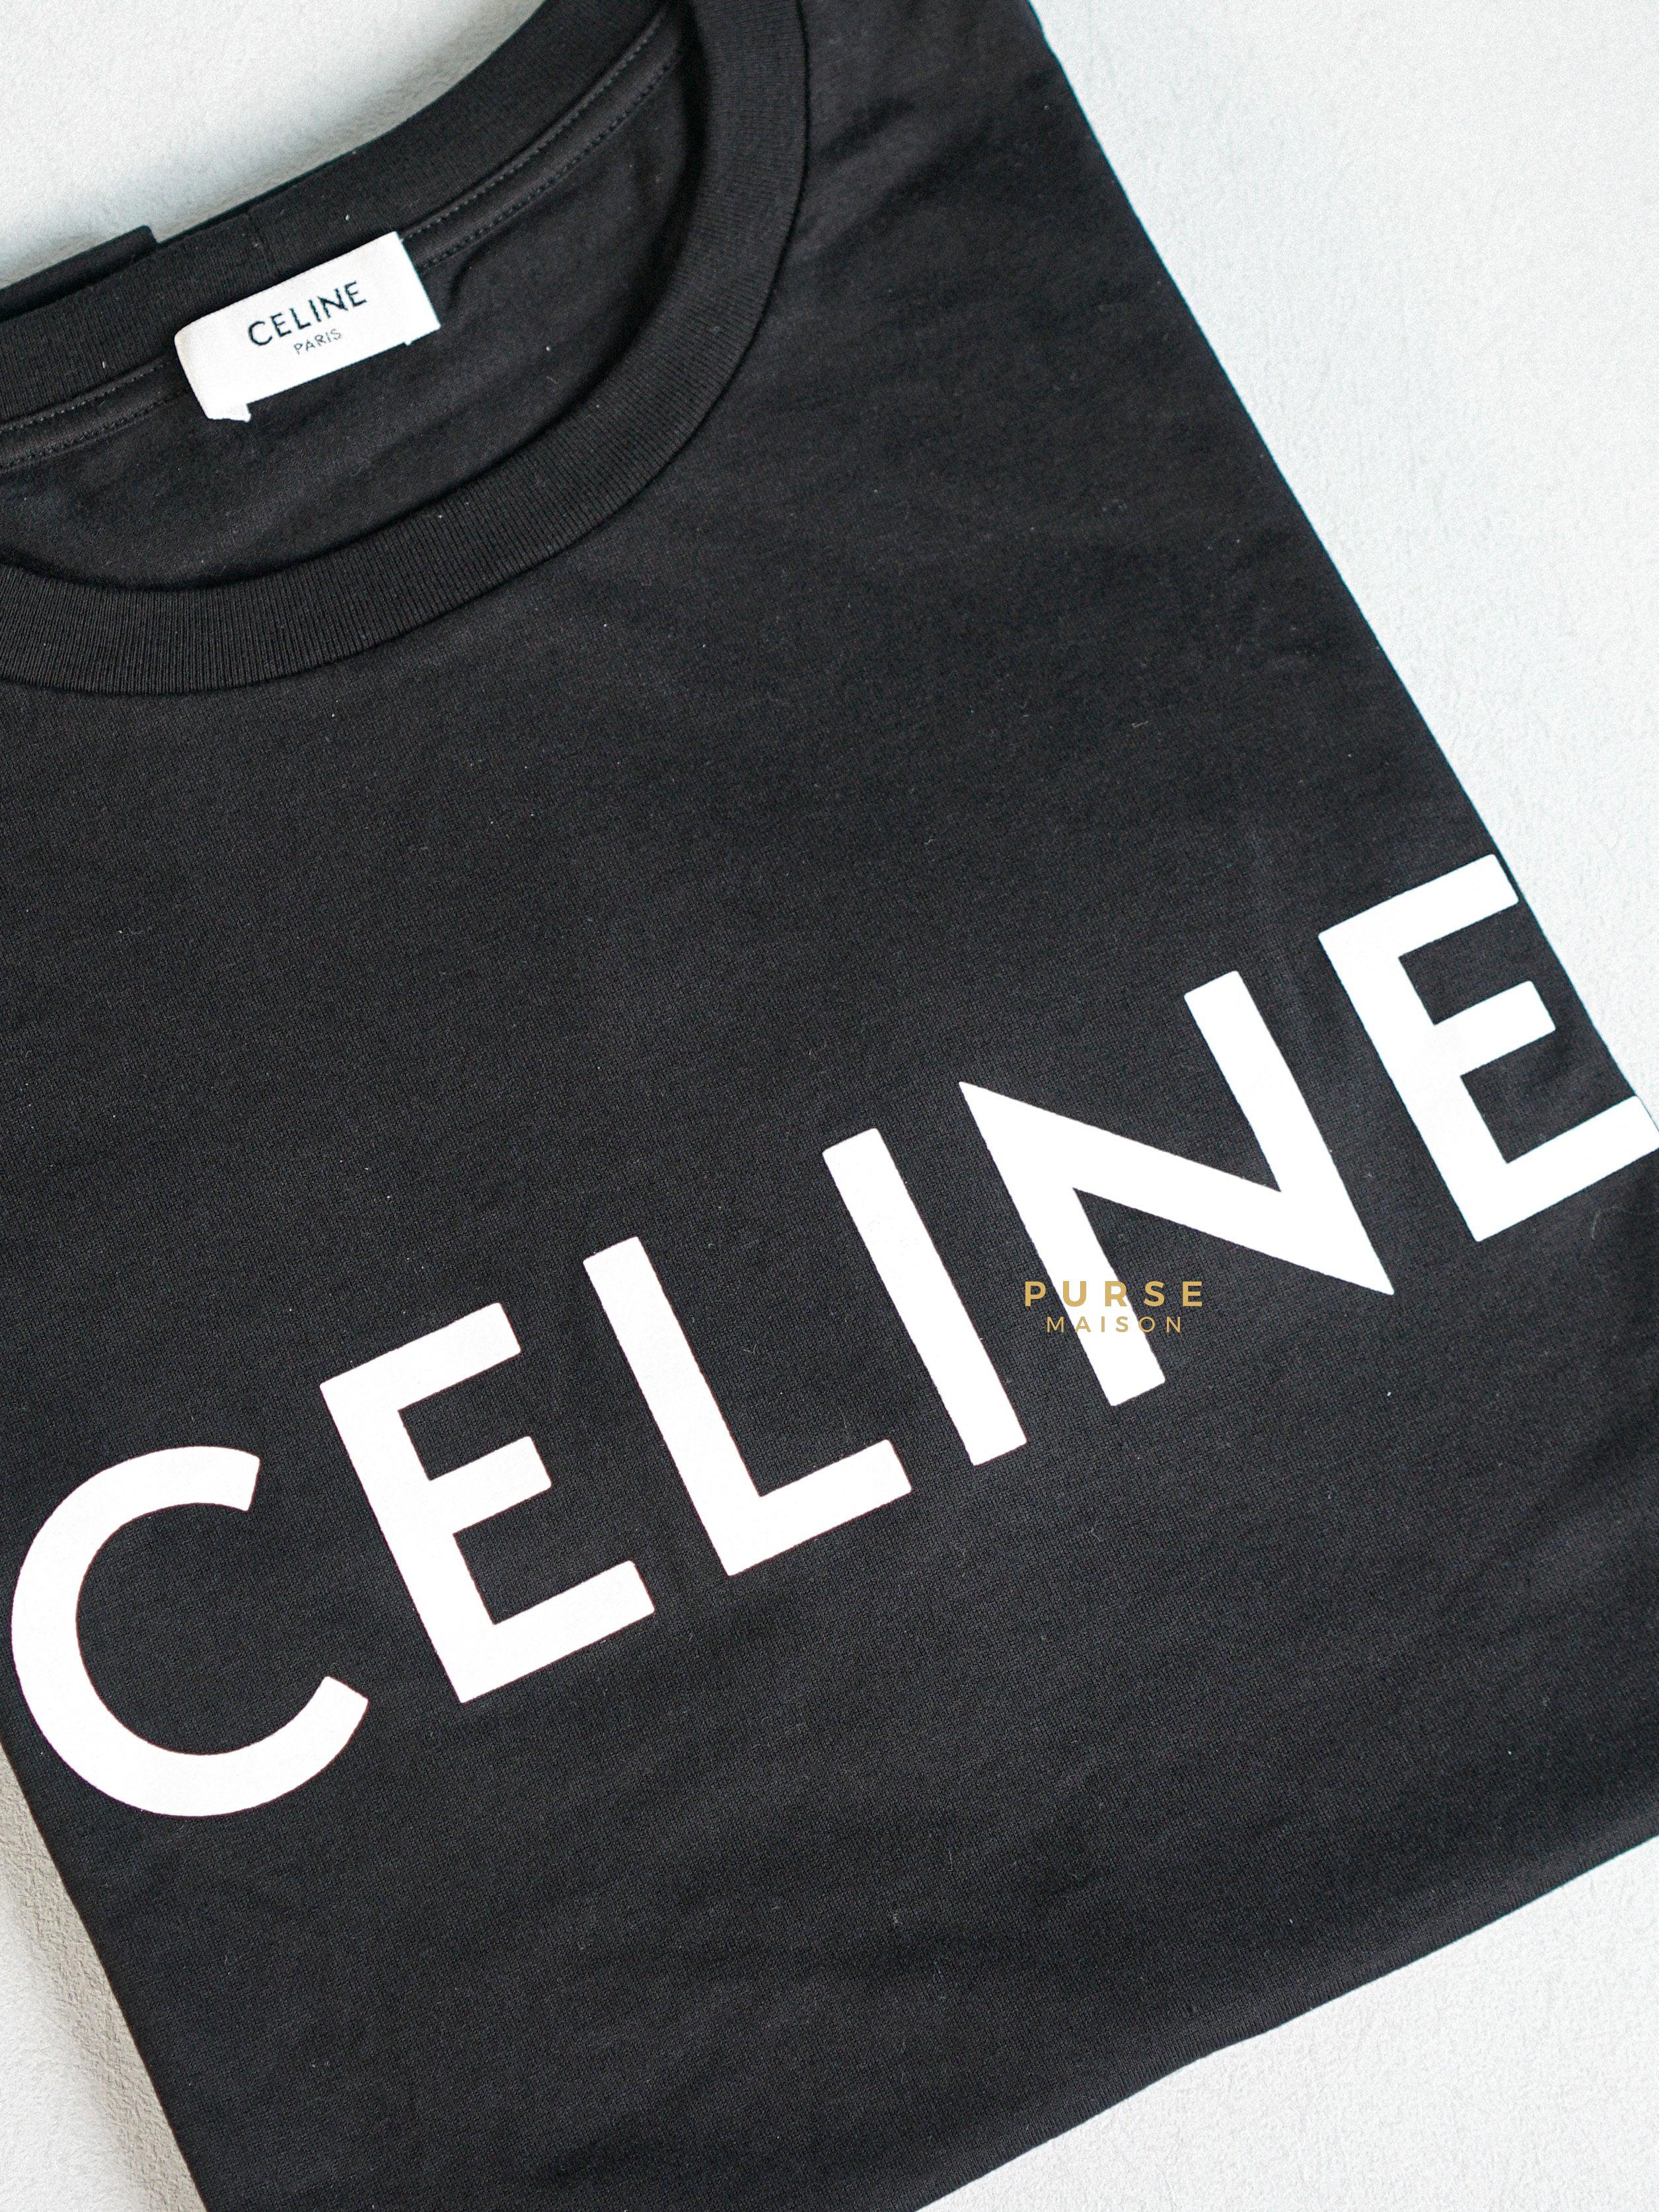 Men's Loose Celine t-shirt in jersey cotton, CELINE